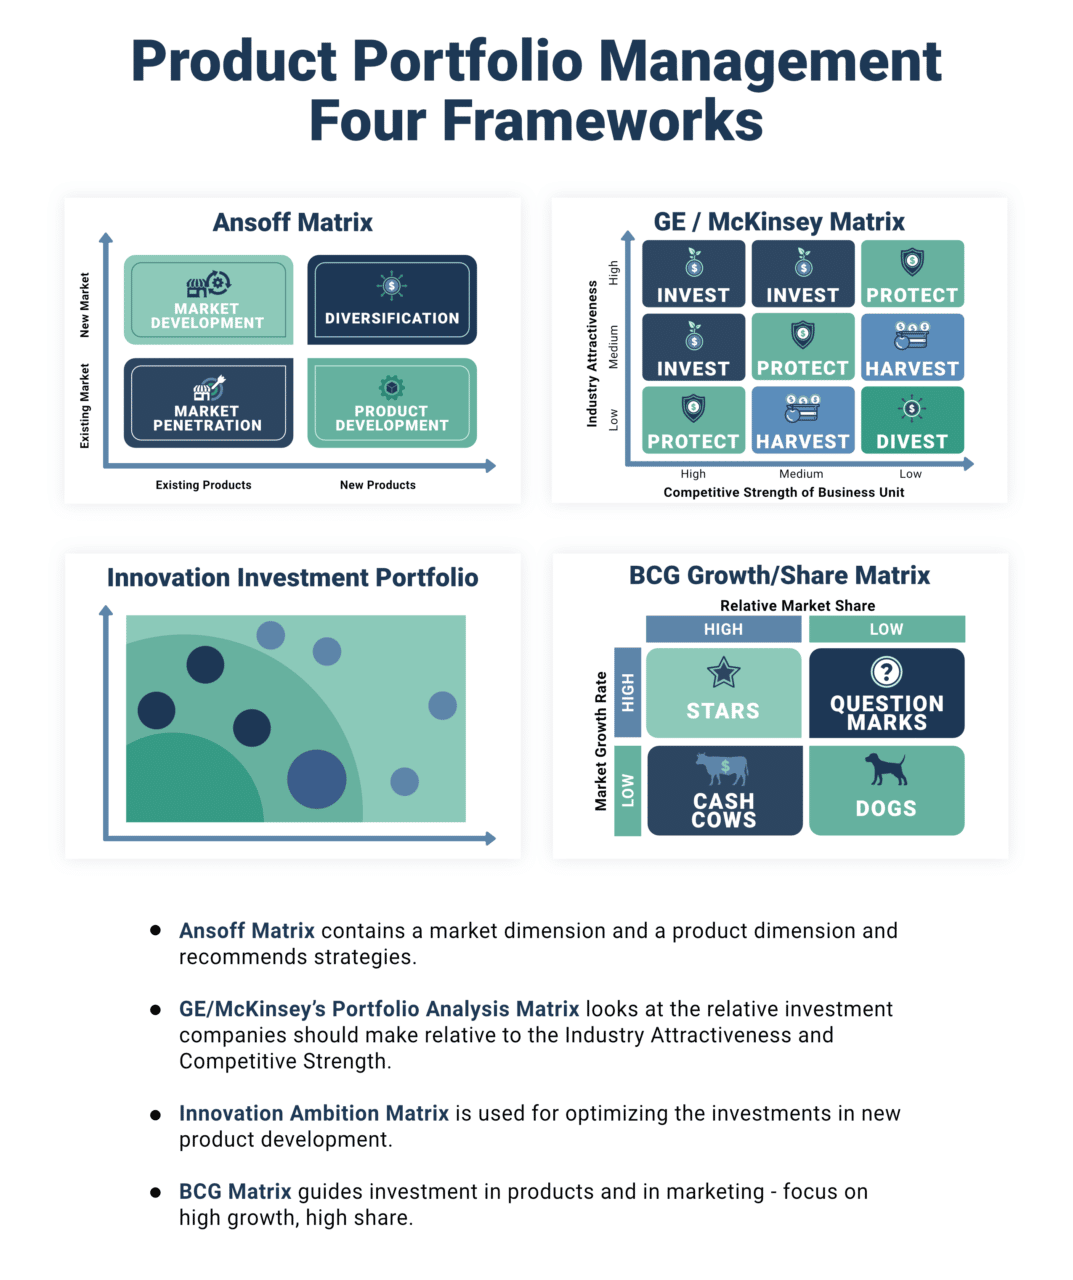 Product Portfolio Management - Four Frameworks